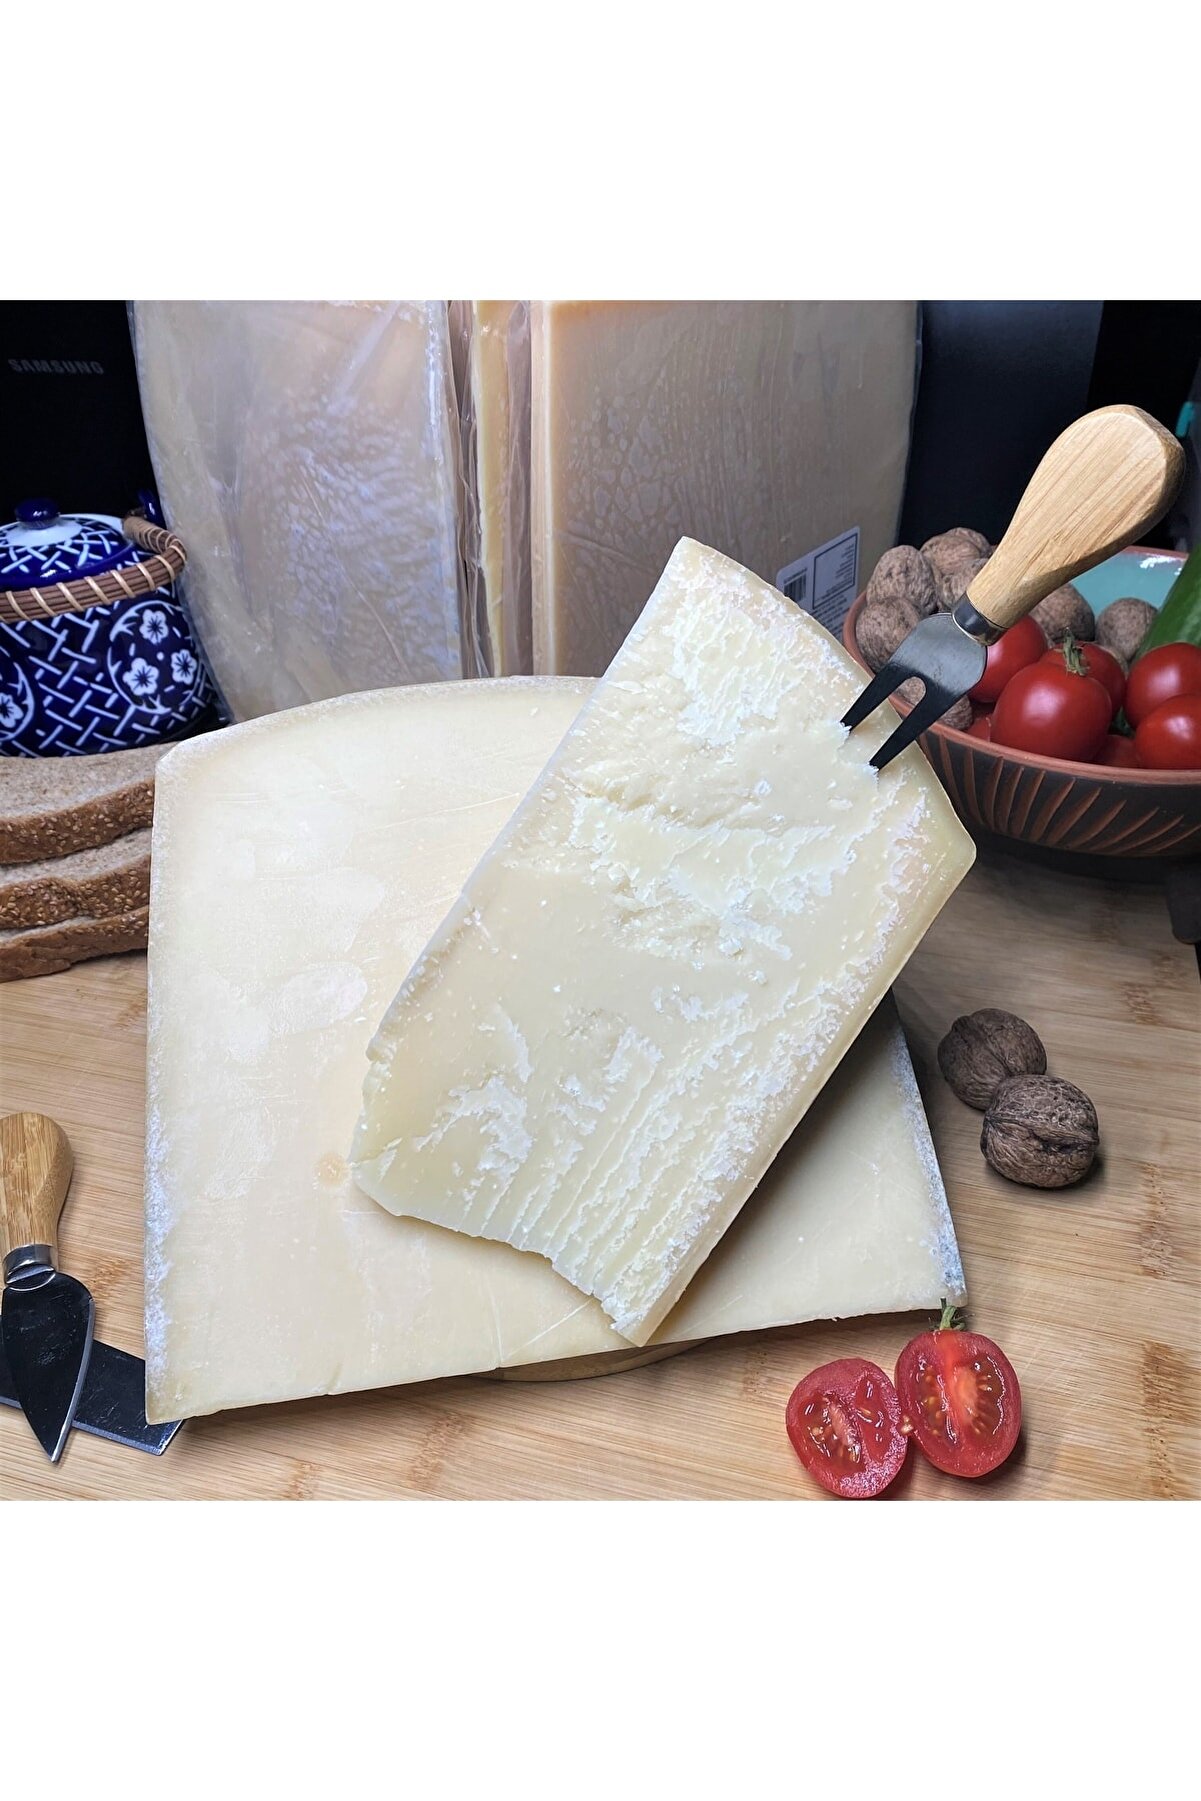 Tekin Gurme Ithal Grana Padano Parmesan Peyniri 200gr